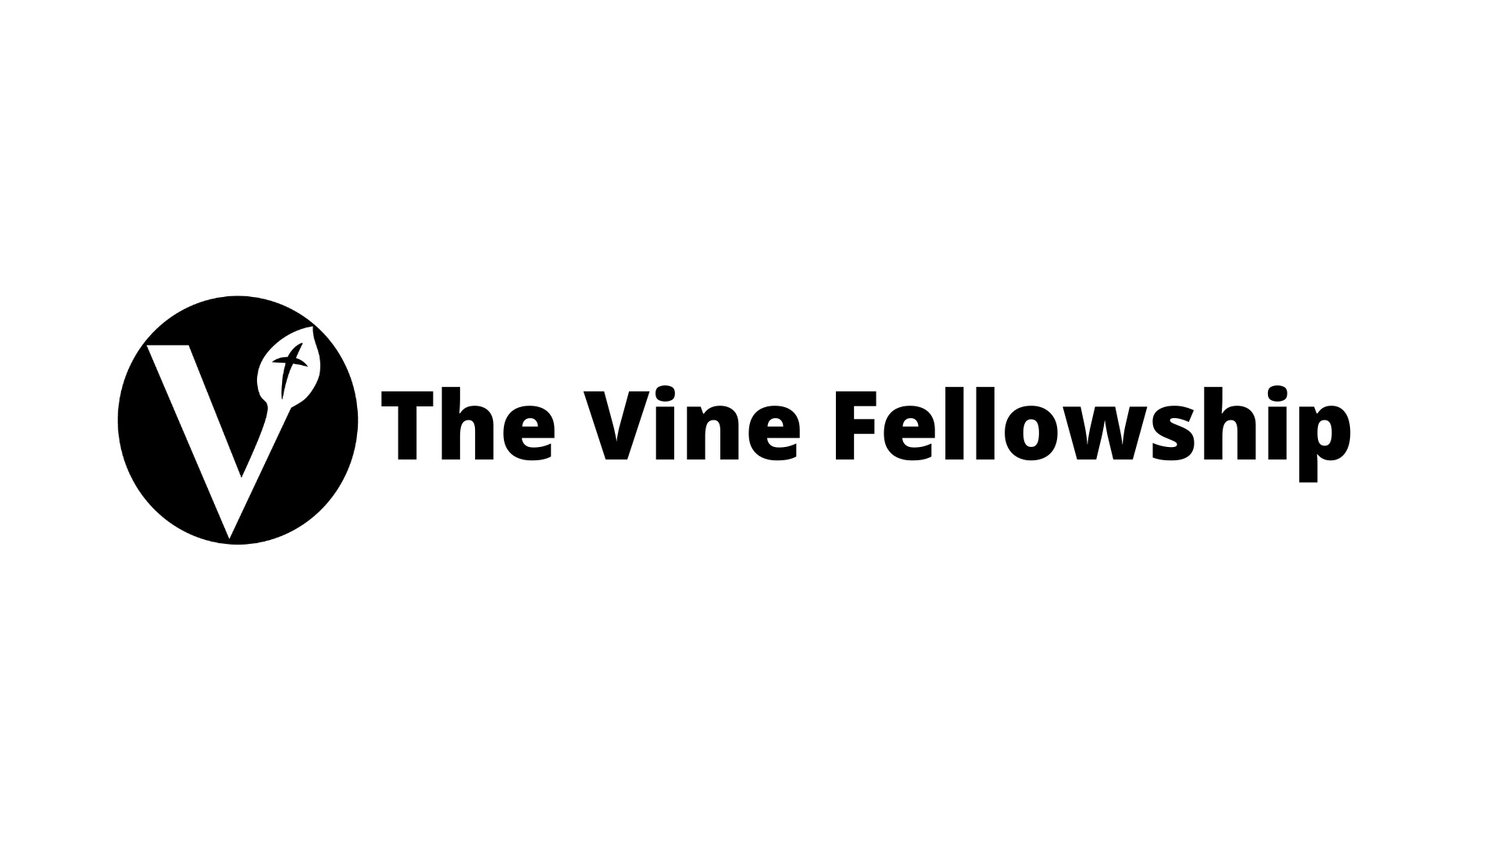 The Vine Fellowship